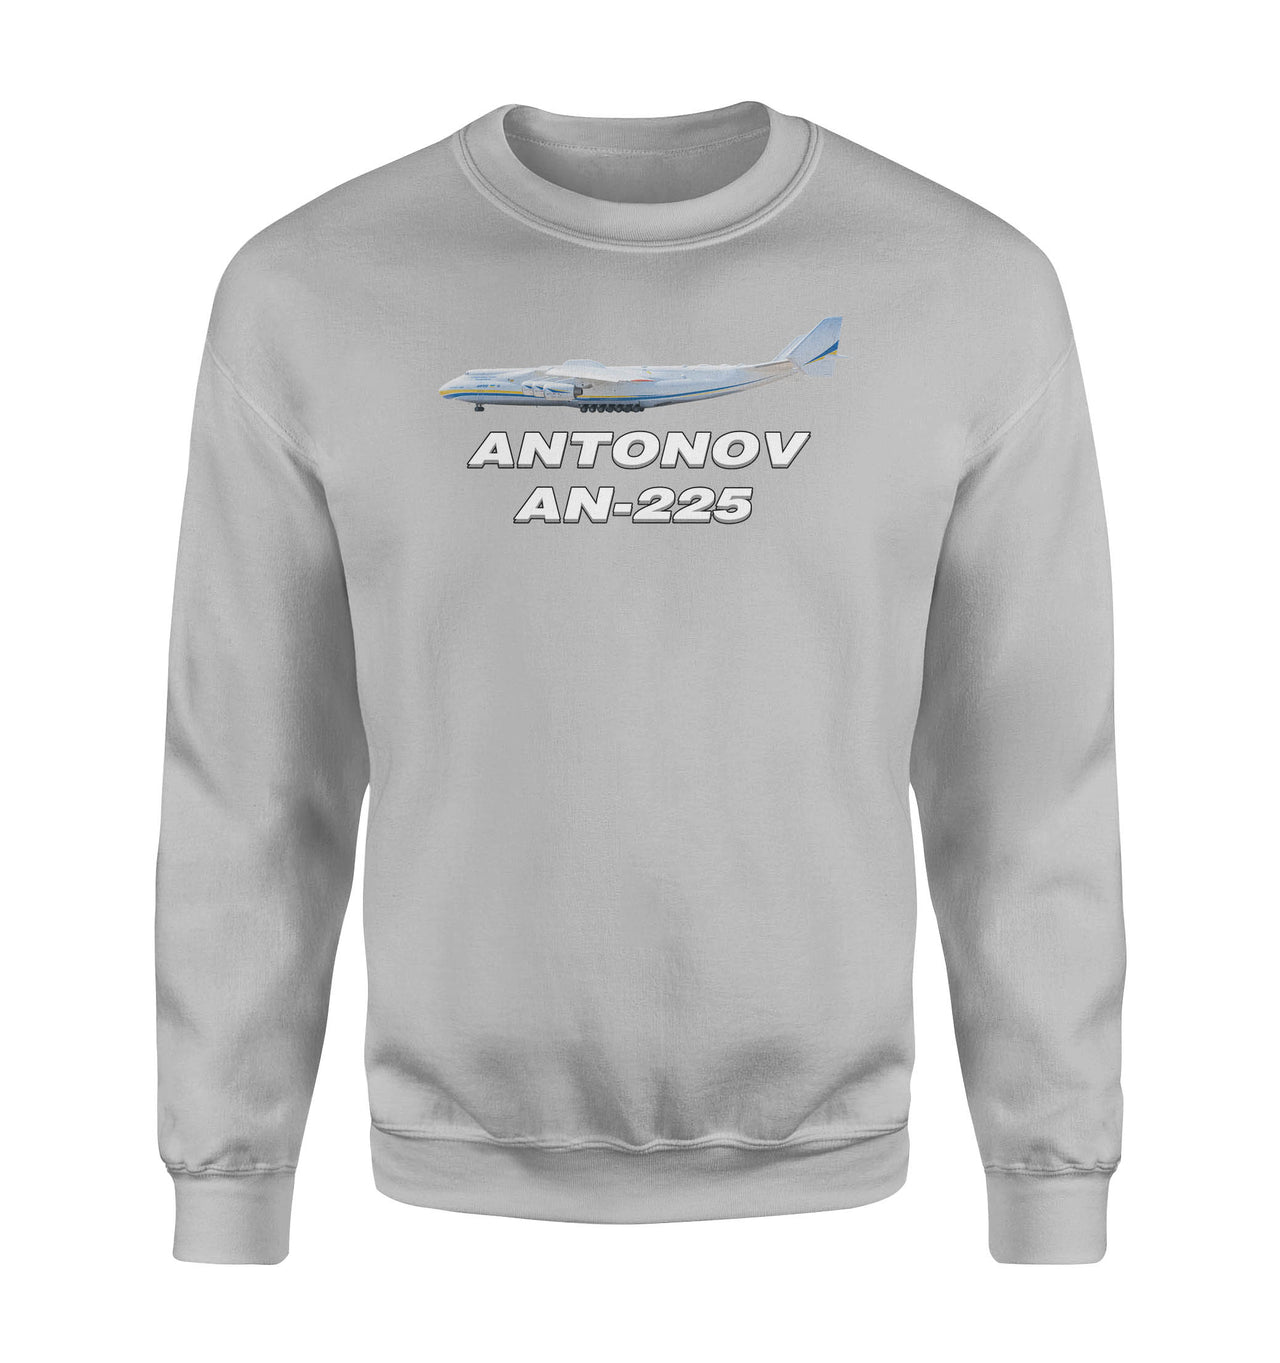 The Antonov AN-225 Designed Sweatshirts